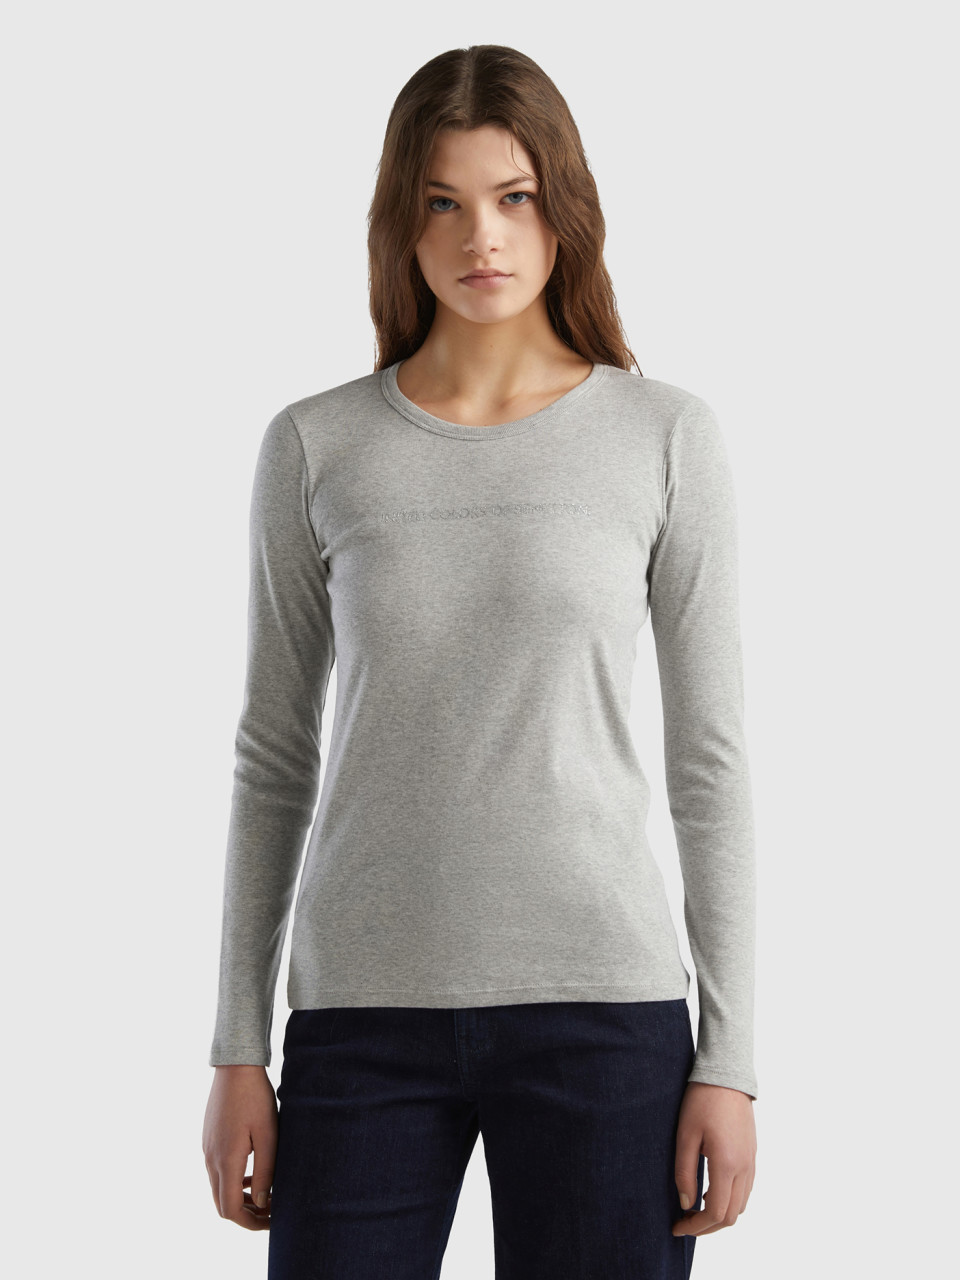 Benetton, Long Sleeve Gray T-shirt In 100% Cotton, Light Gray, Women